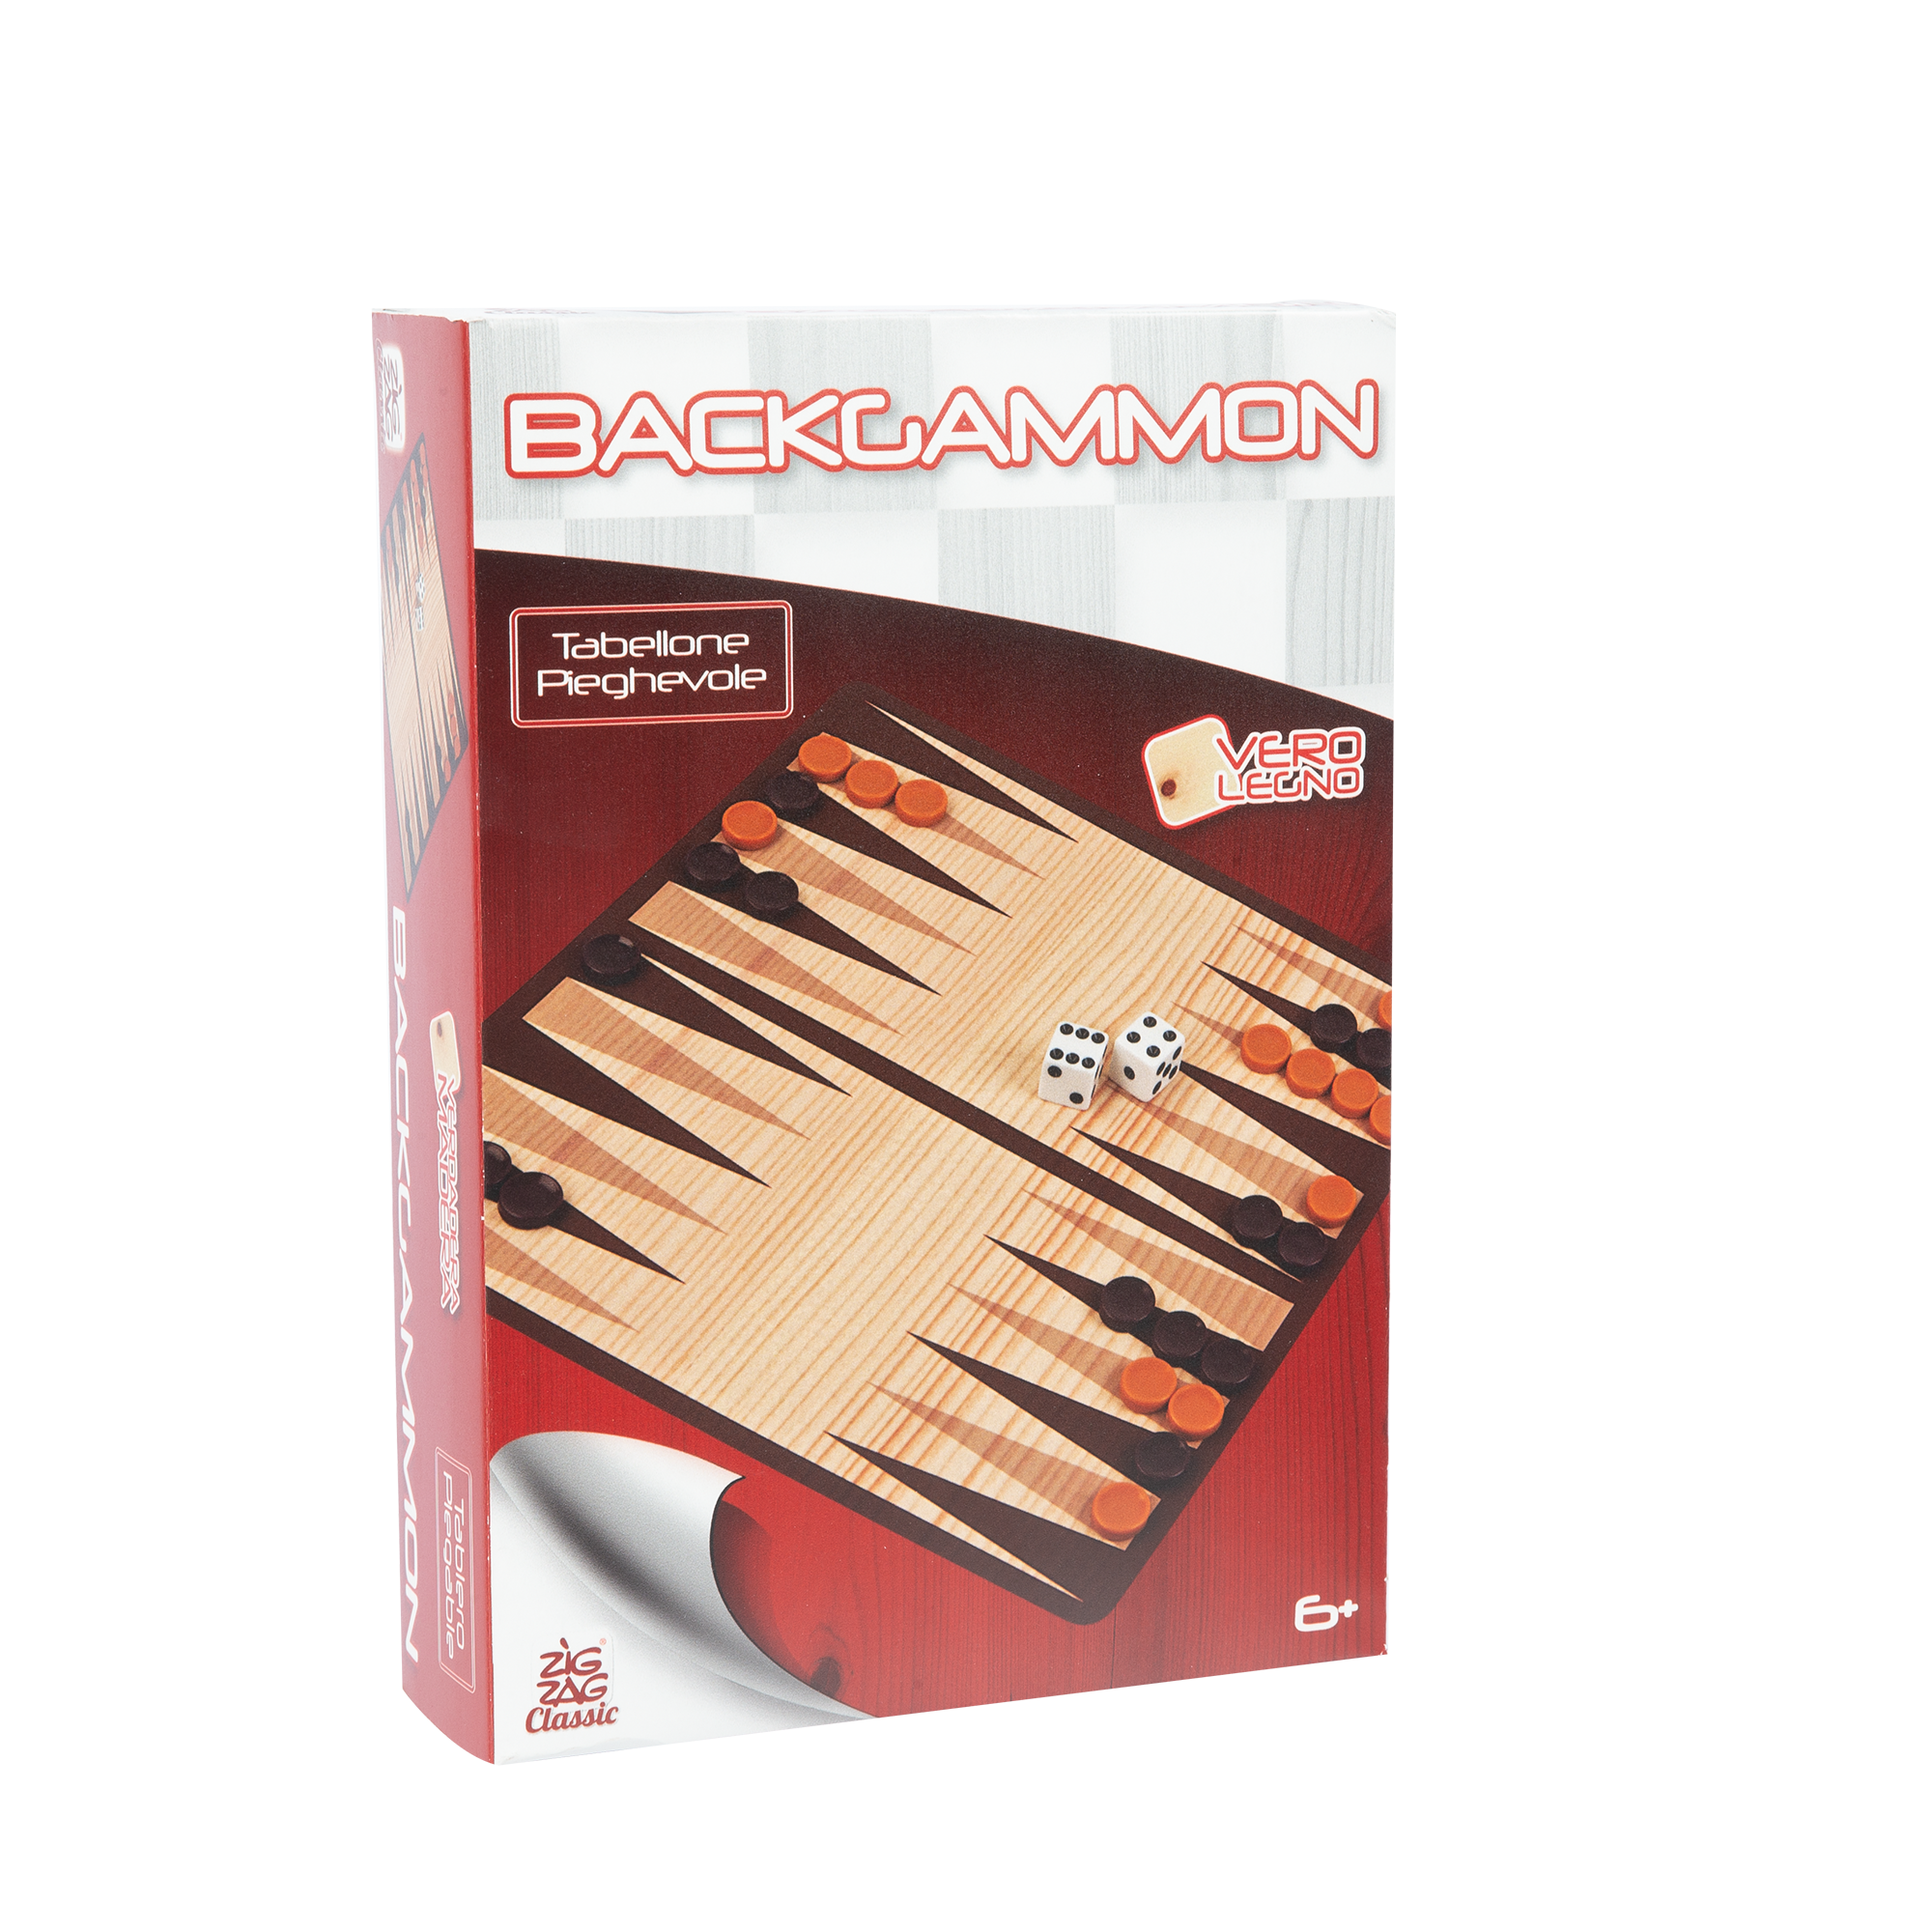 Backgammon - ZIG ZAG